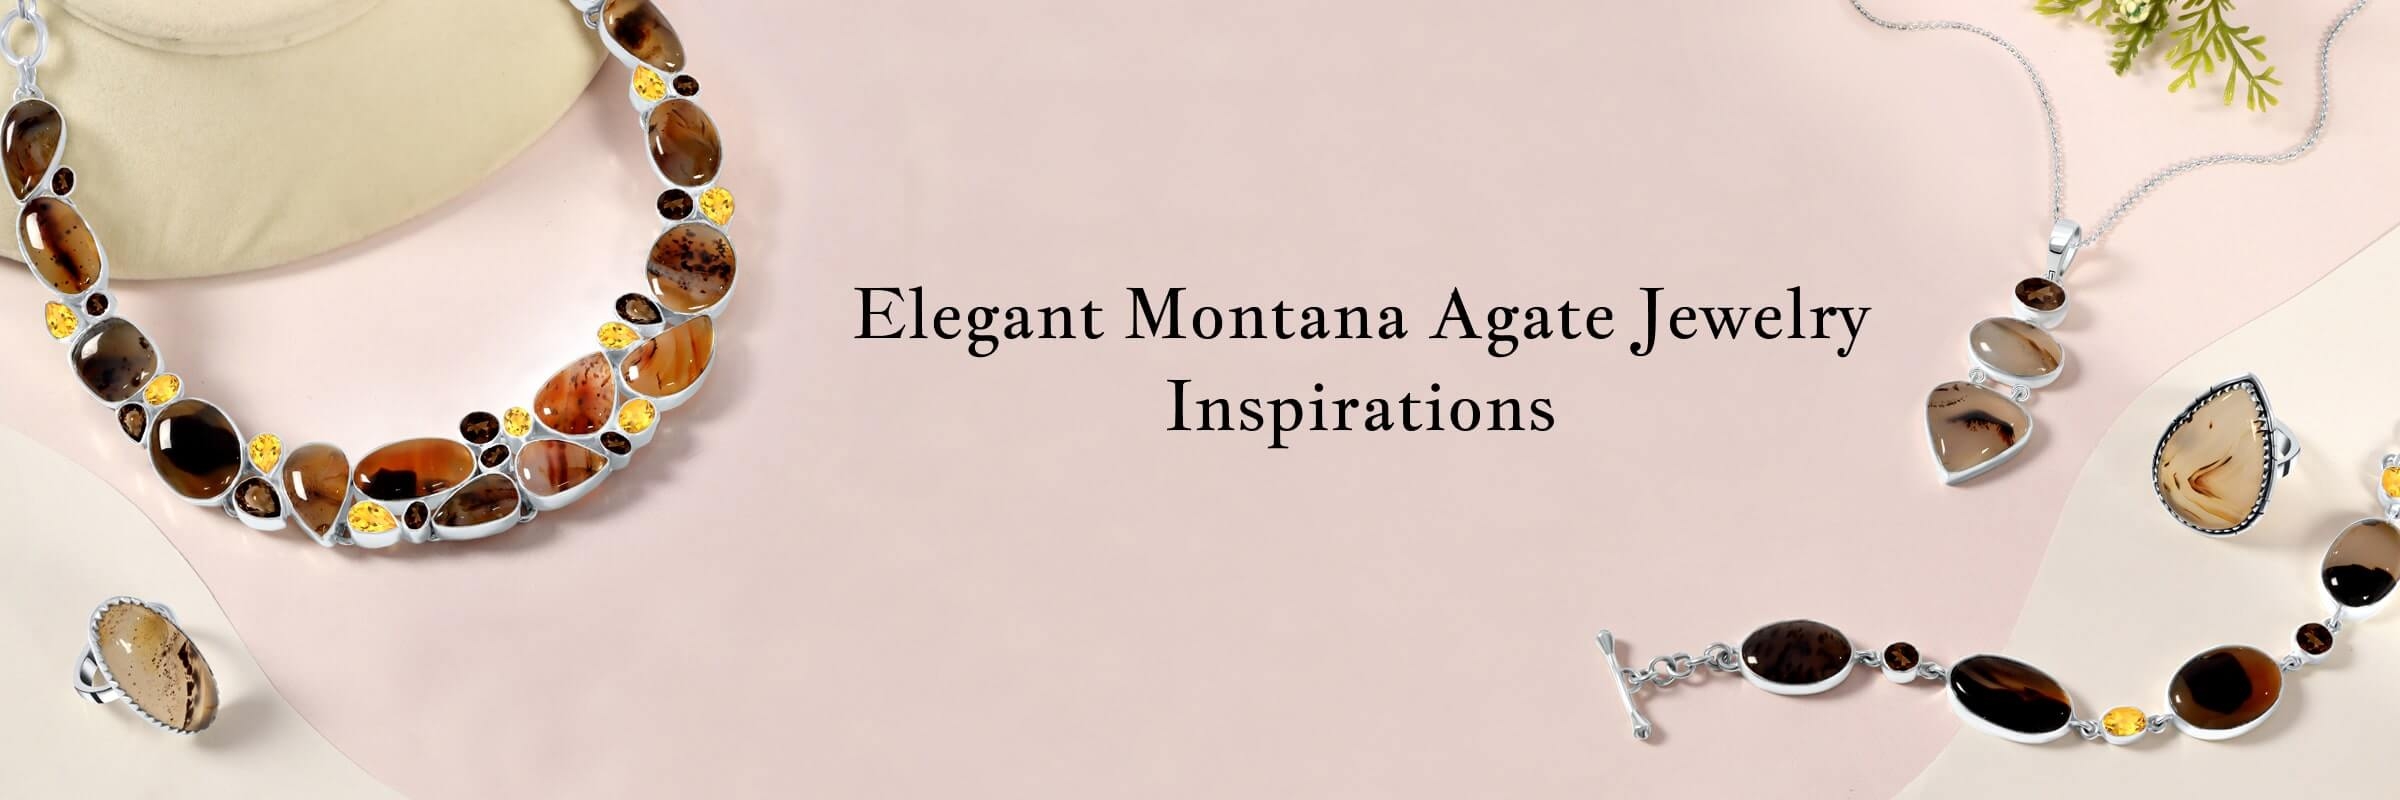 Best jewelry ideas with Montana agate